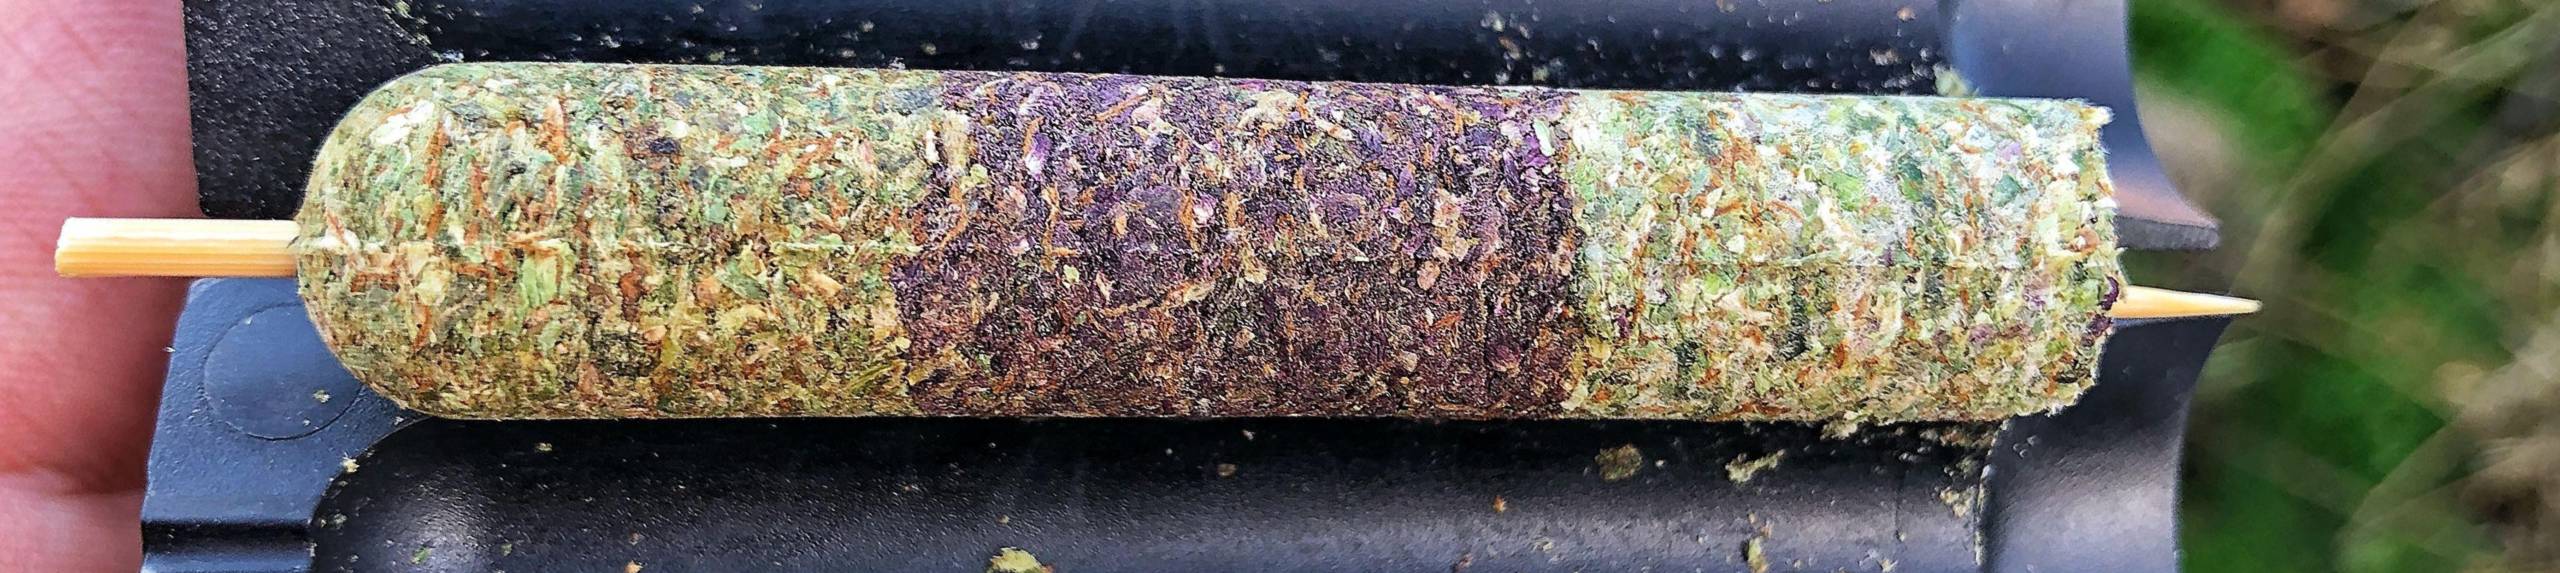 Purple Rose Supply G2 Cannagar Mold Review & Photos